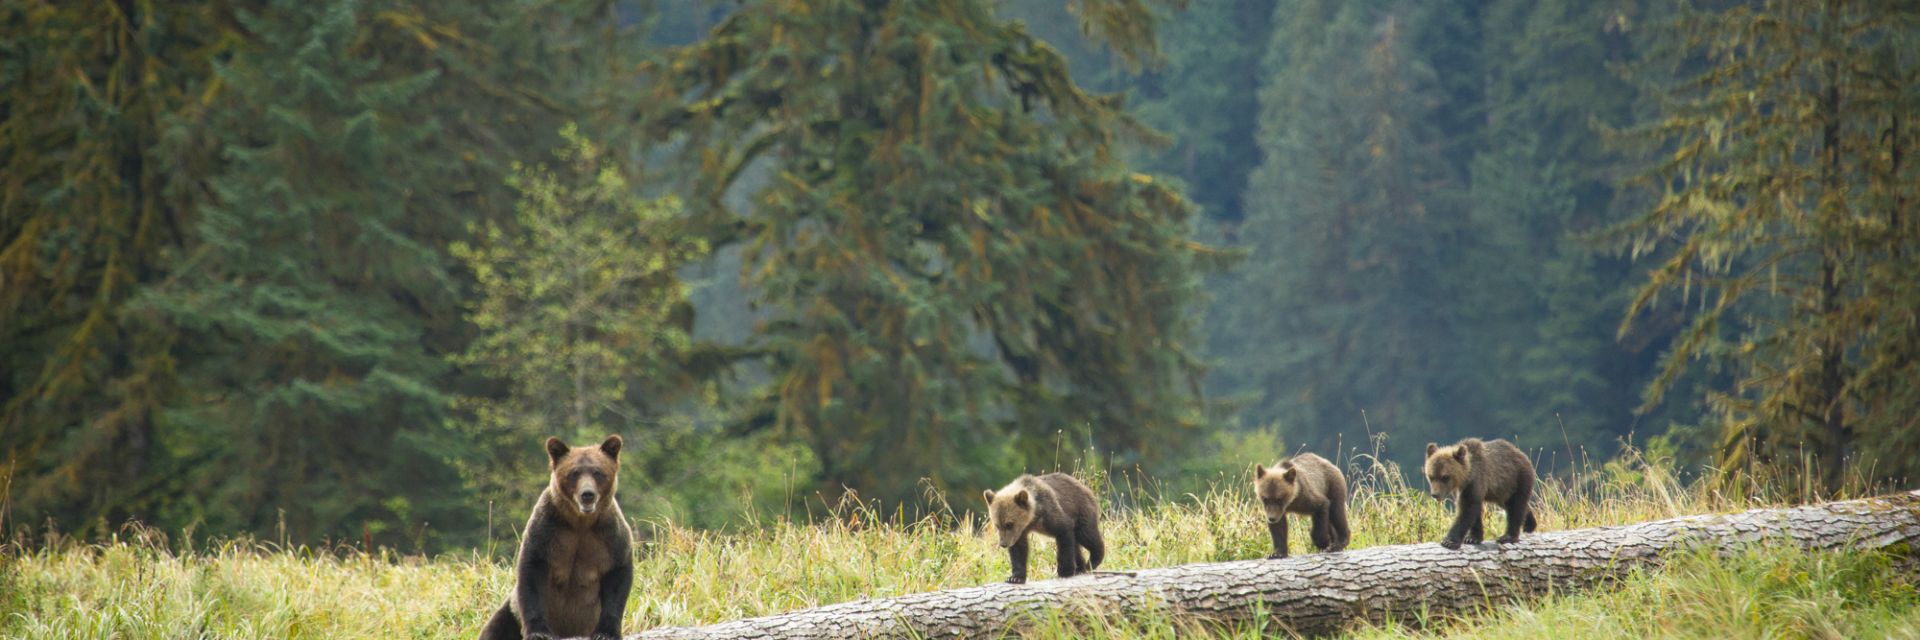 Four bears walk along a fallen log in a lush BC forest.